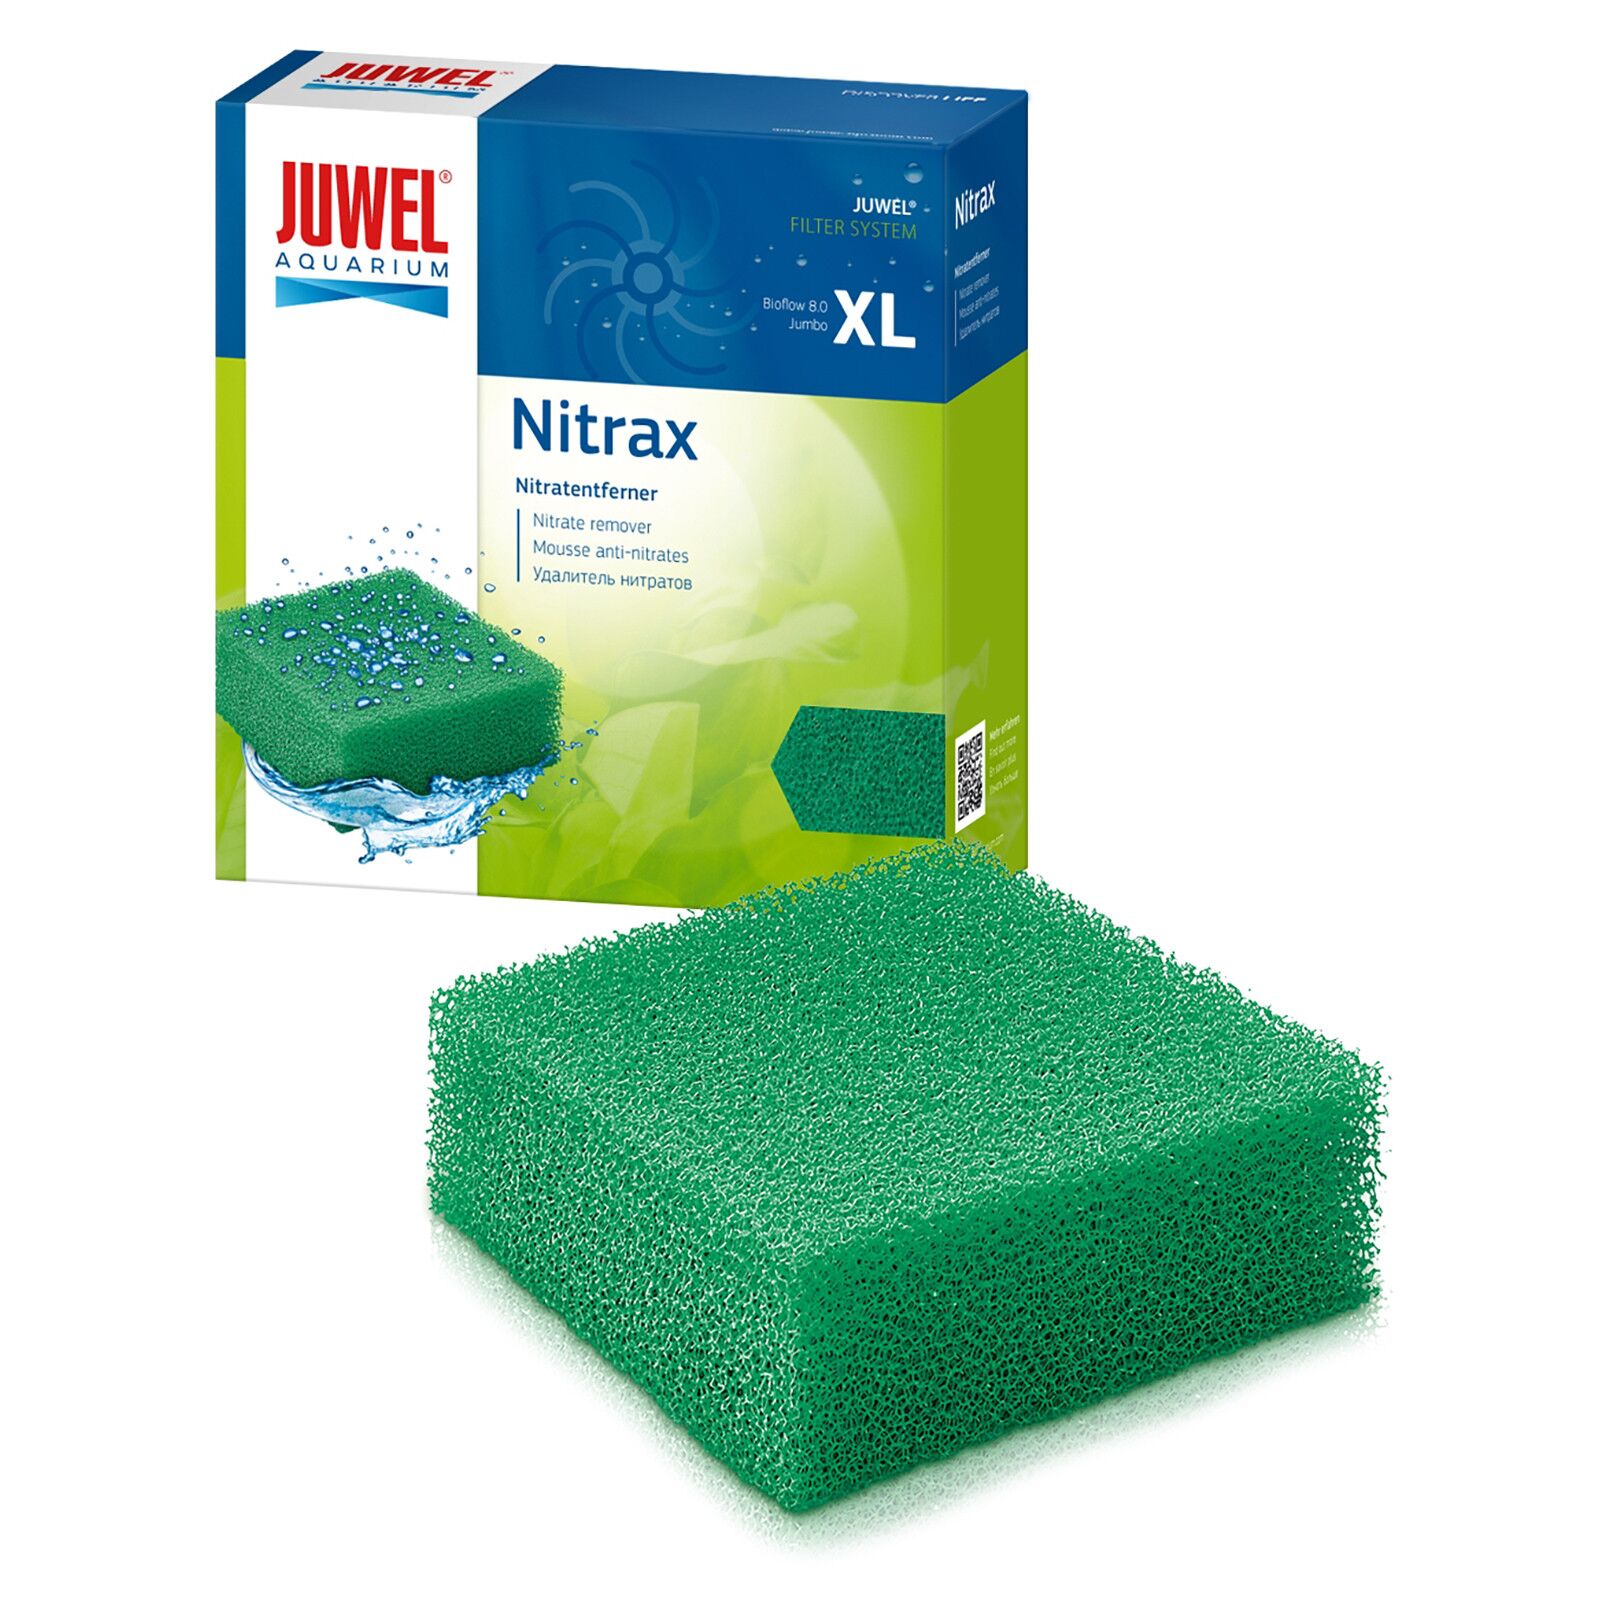 Juwel - Nitrax硝酸盐去除剂